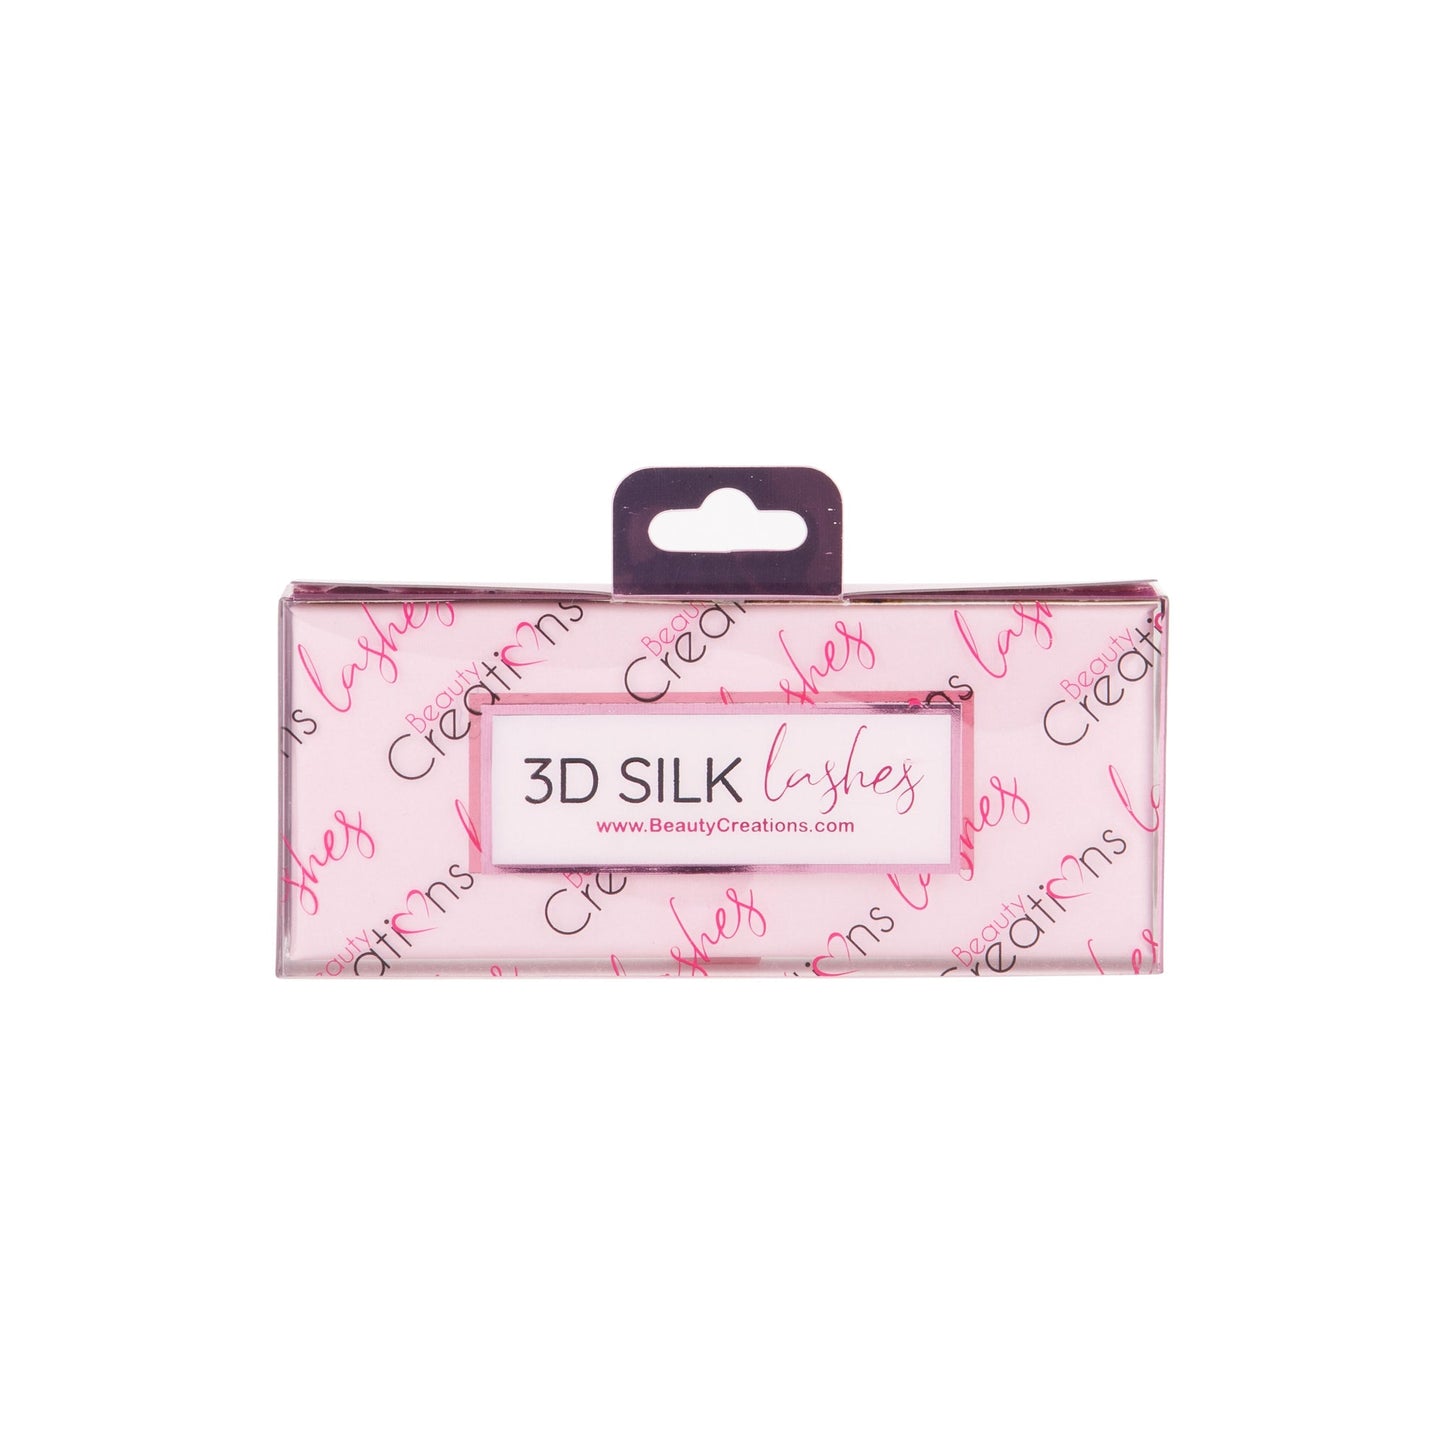 Take The Spotlight - 3D Silk Lashes